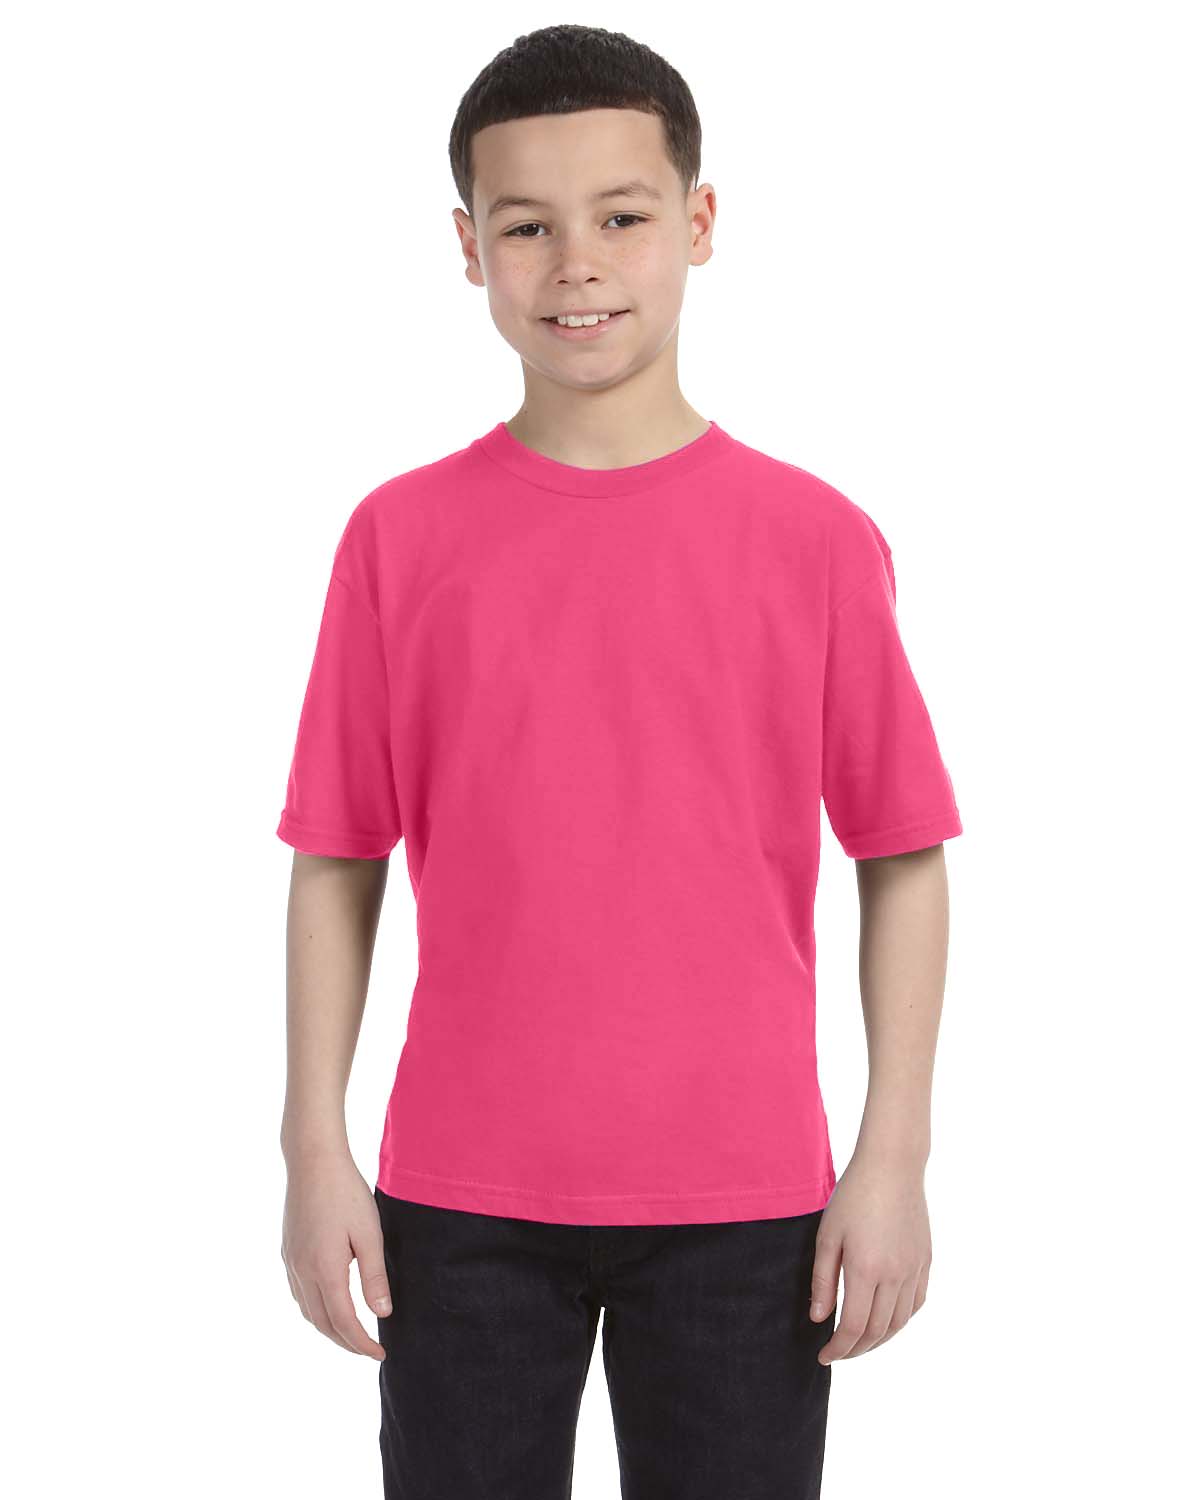 990B Anvil Youth Lightweight T-Shirt